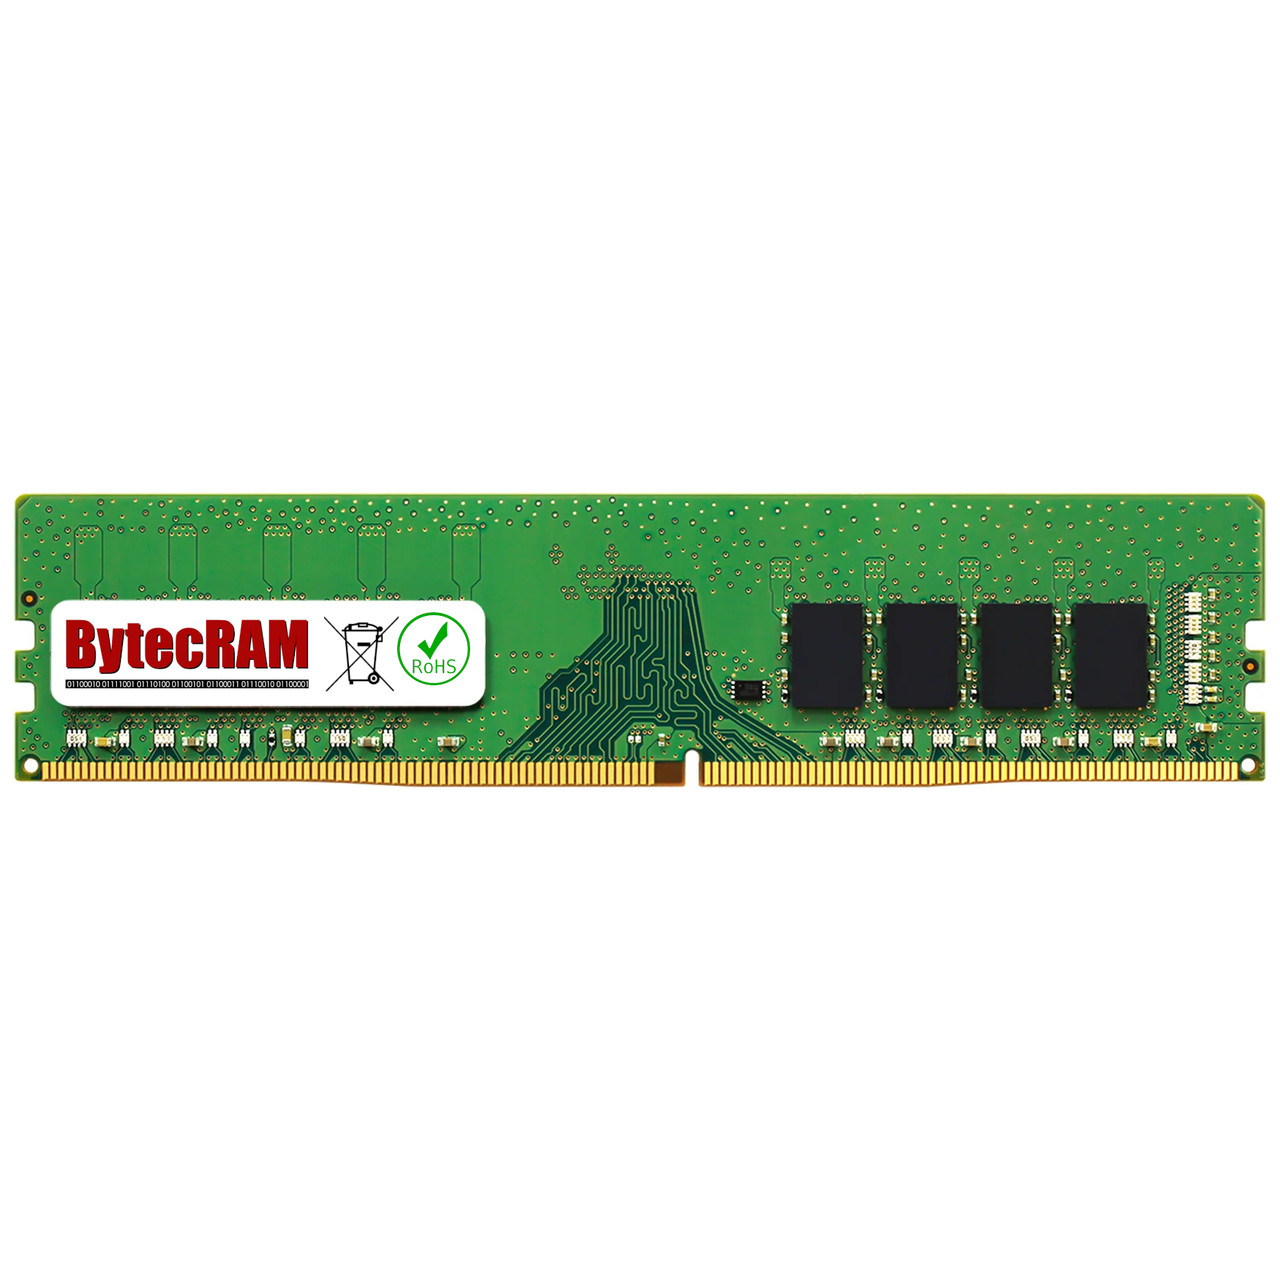 eBay*32GB Lenovo ThinkStation P330 2nd Gen 30D3 DDR4 2933MHz UDIMM Memory RAM Upgrade